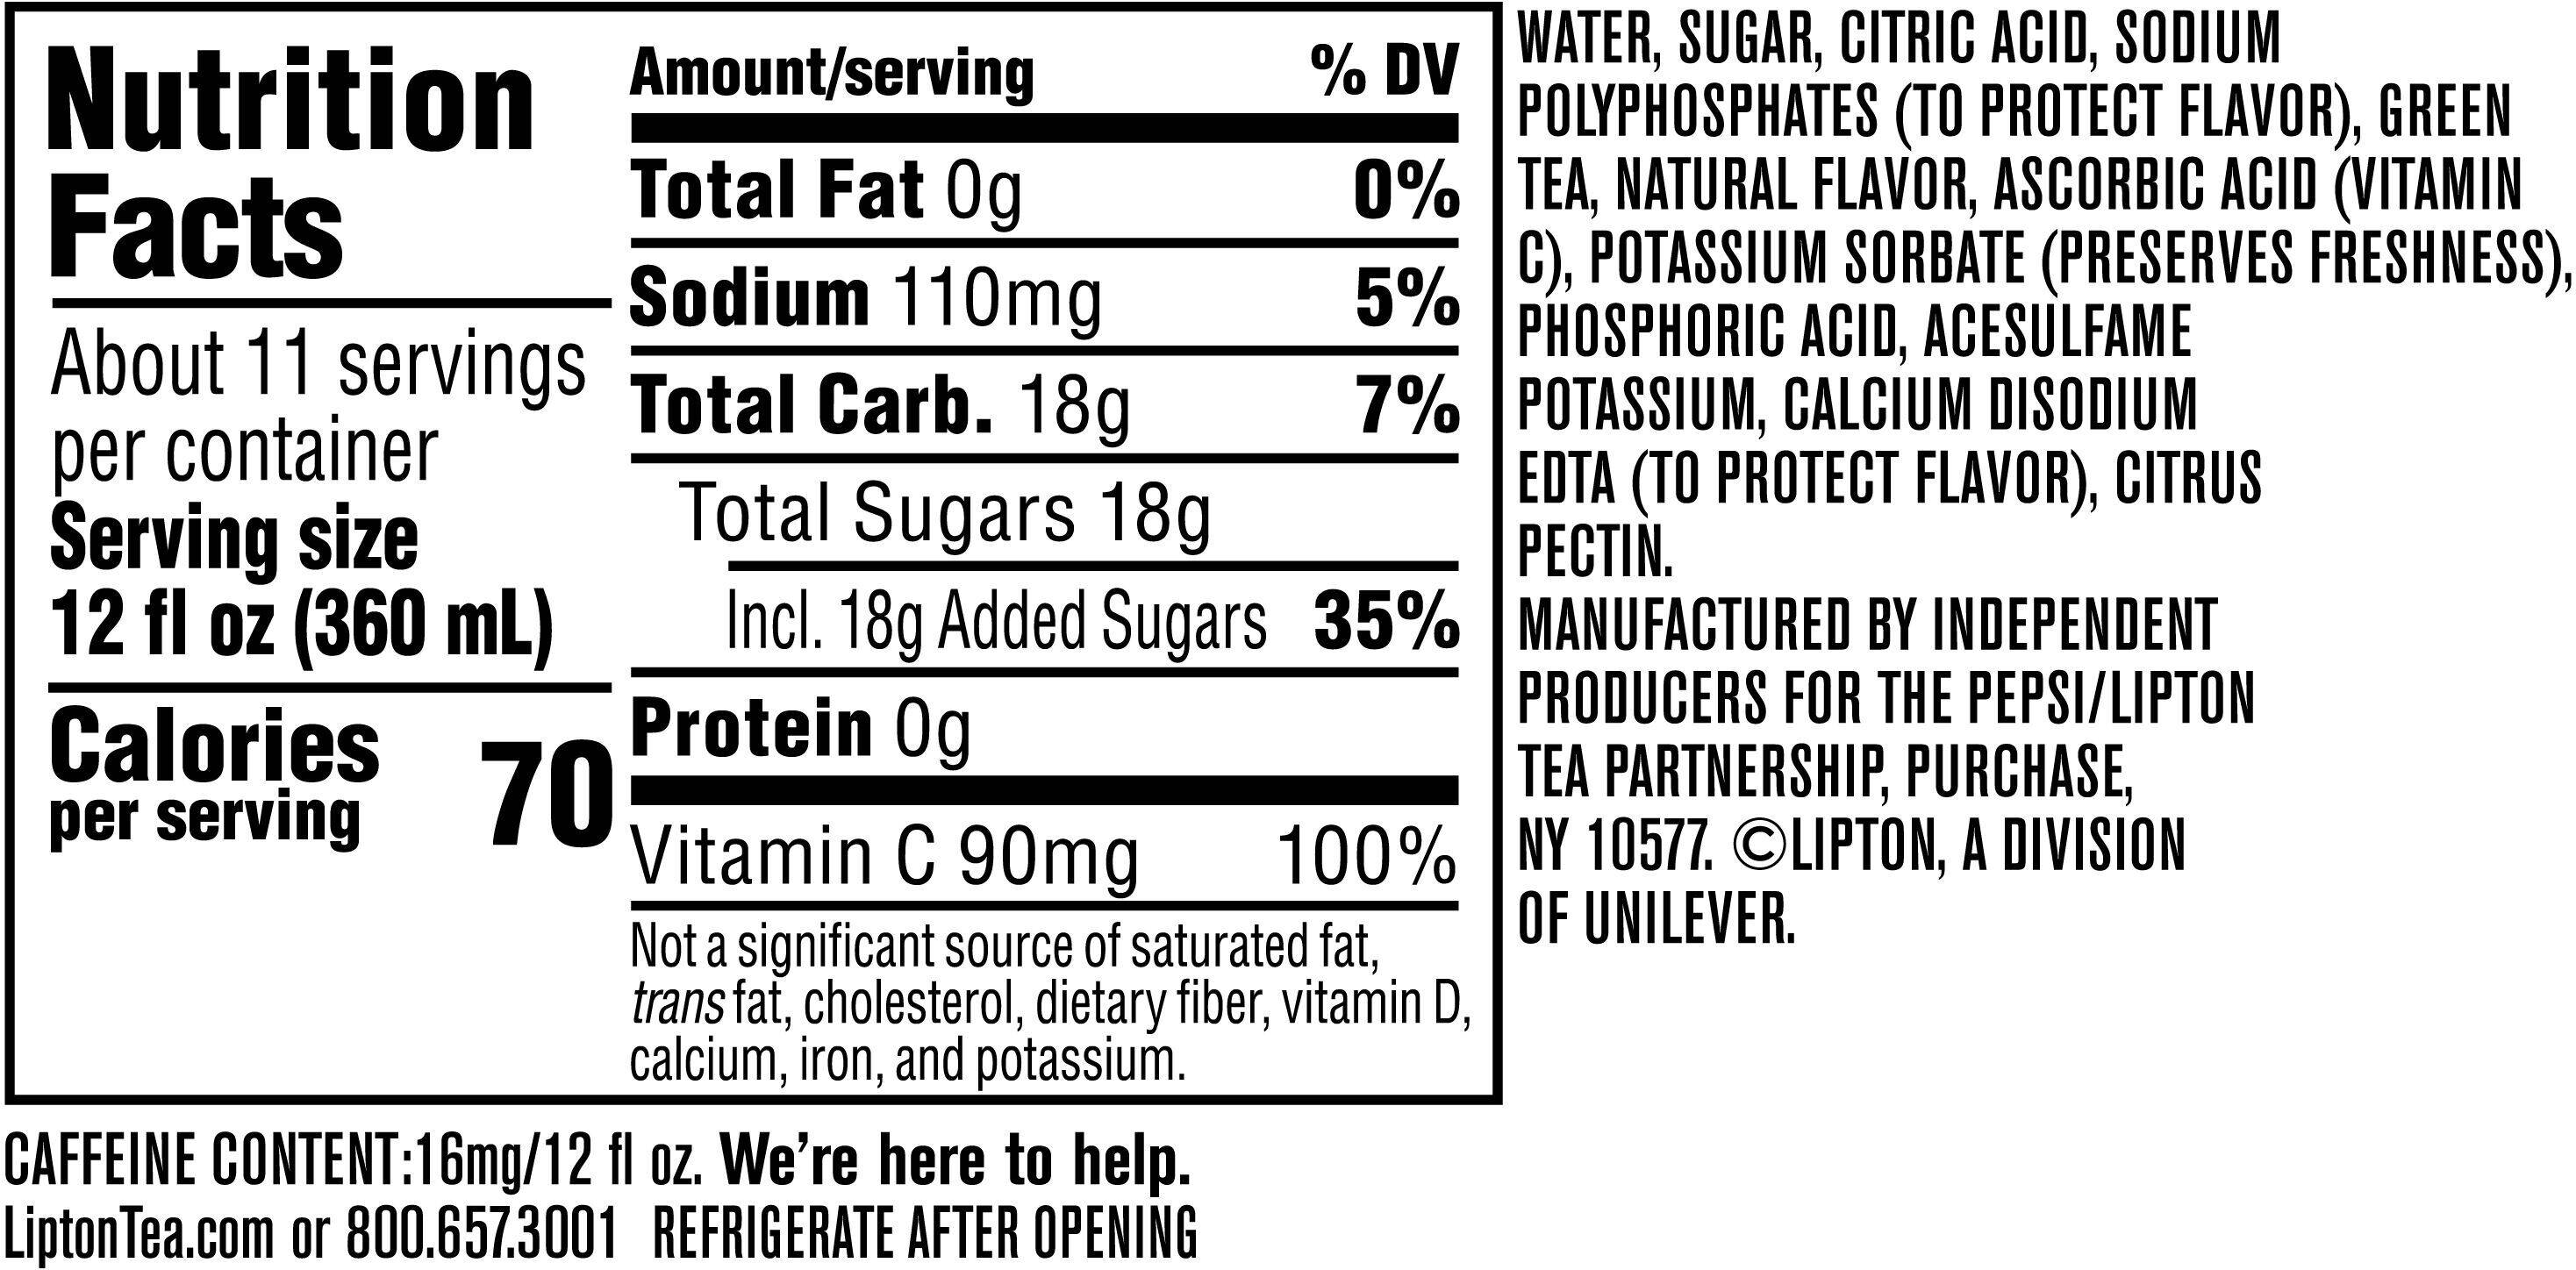 Image describing nutrition information for product Lipton Green Tea Citrus